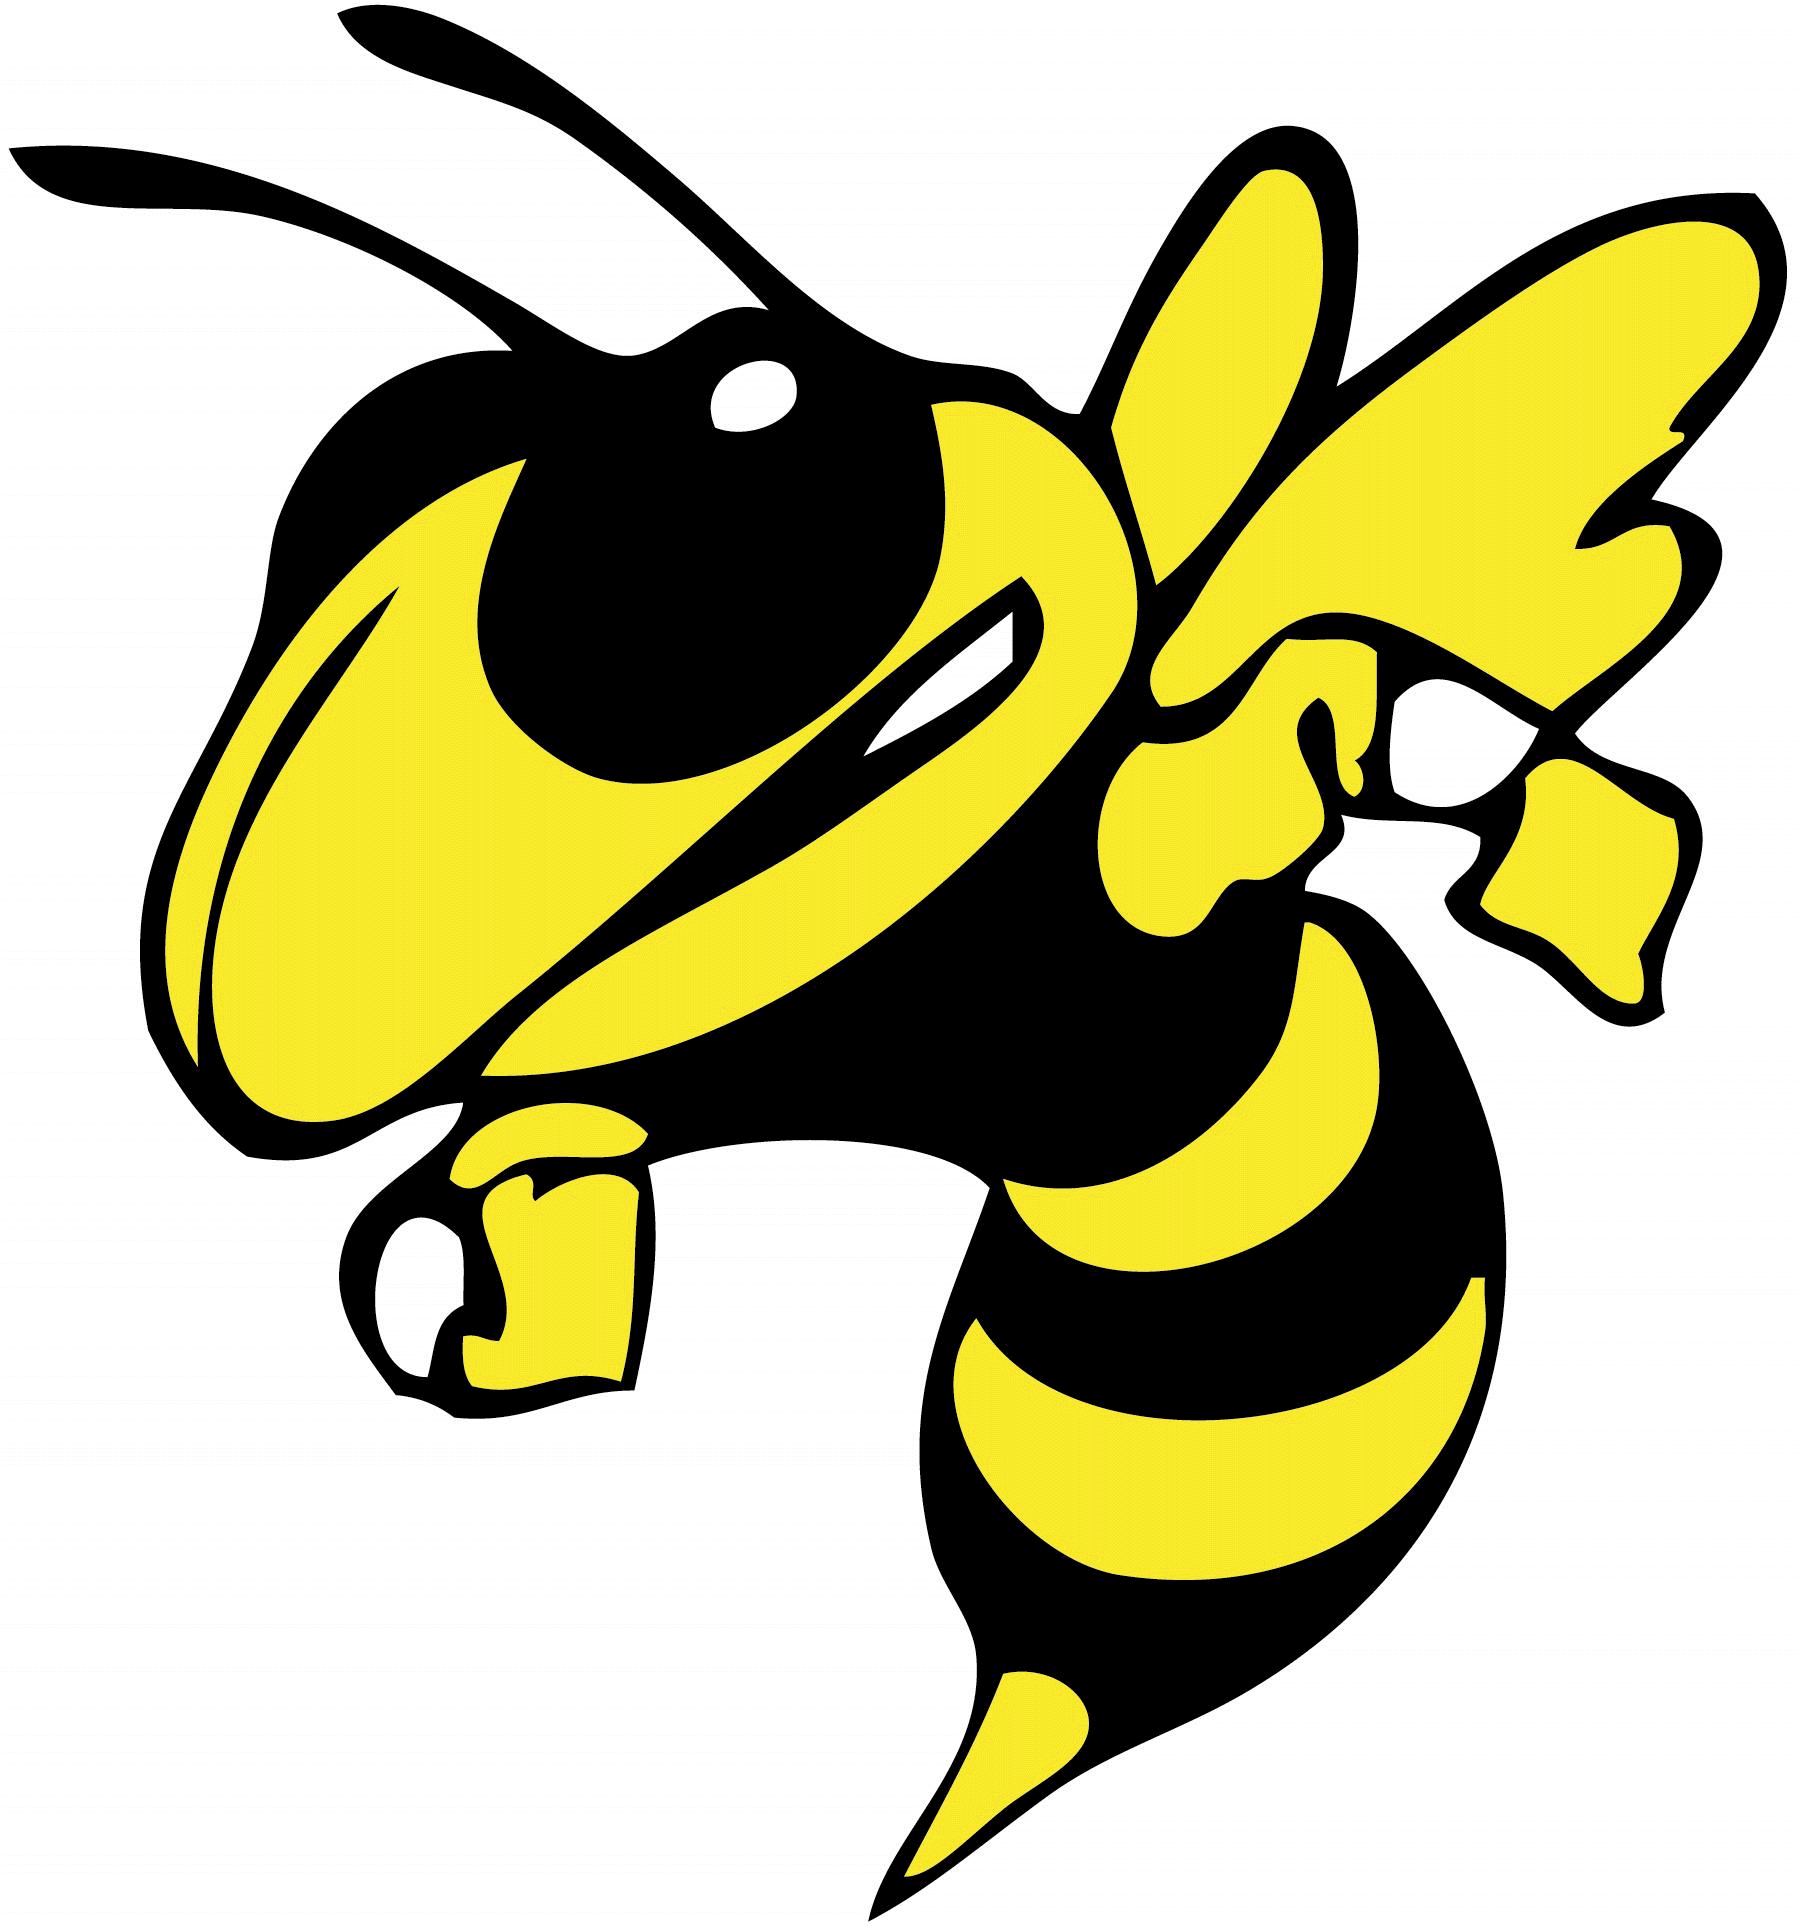 Images For Hornet Cartoon Mascot - Georgia Tech Yellow Jackets Logo (1800x1926)